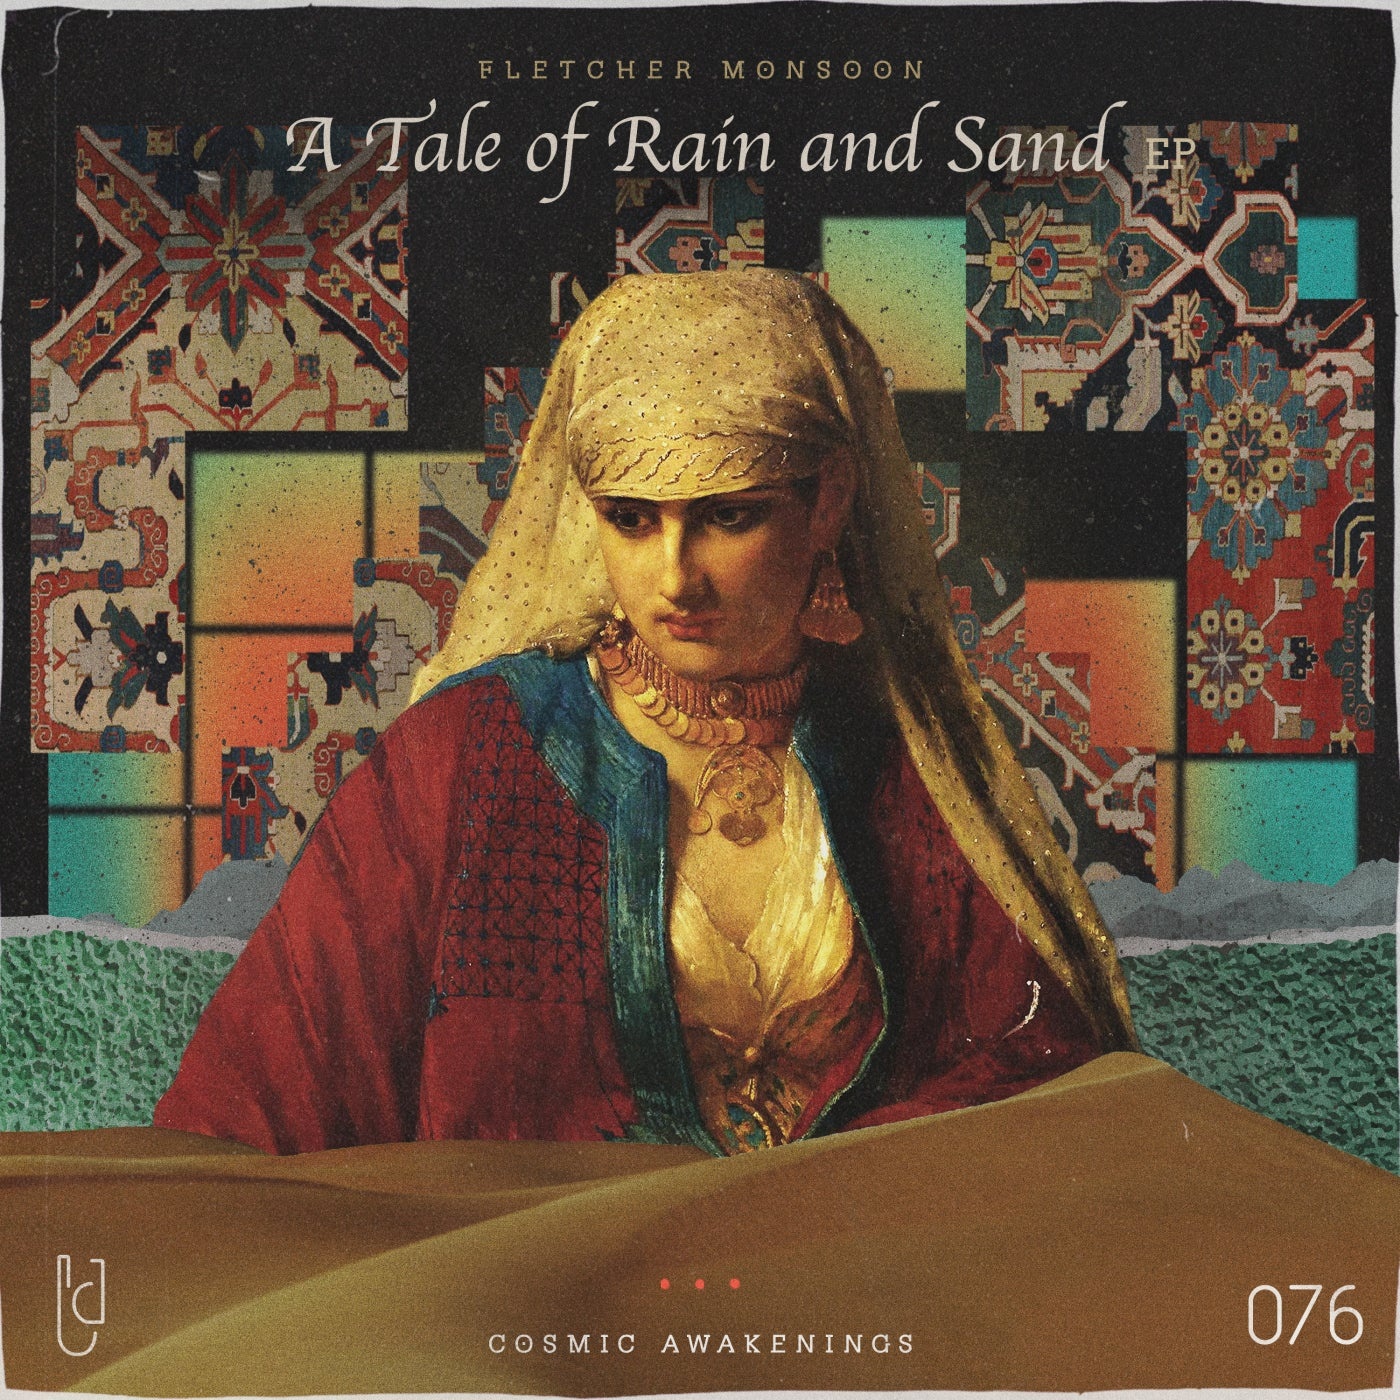 Fletcher Monsoon - A Tale of Rain and Sand [CA076]